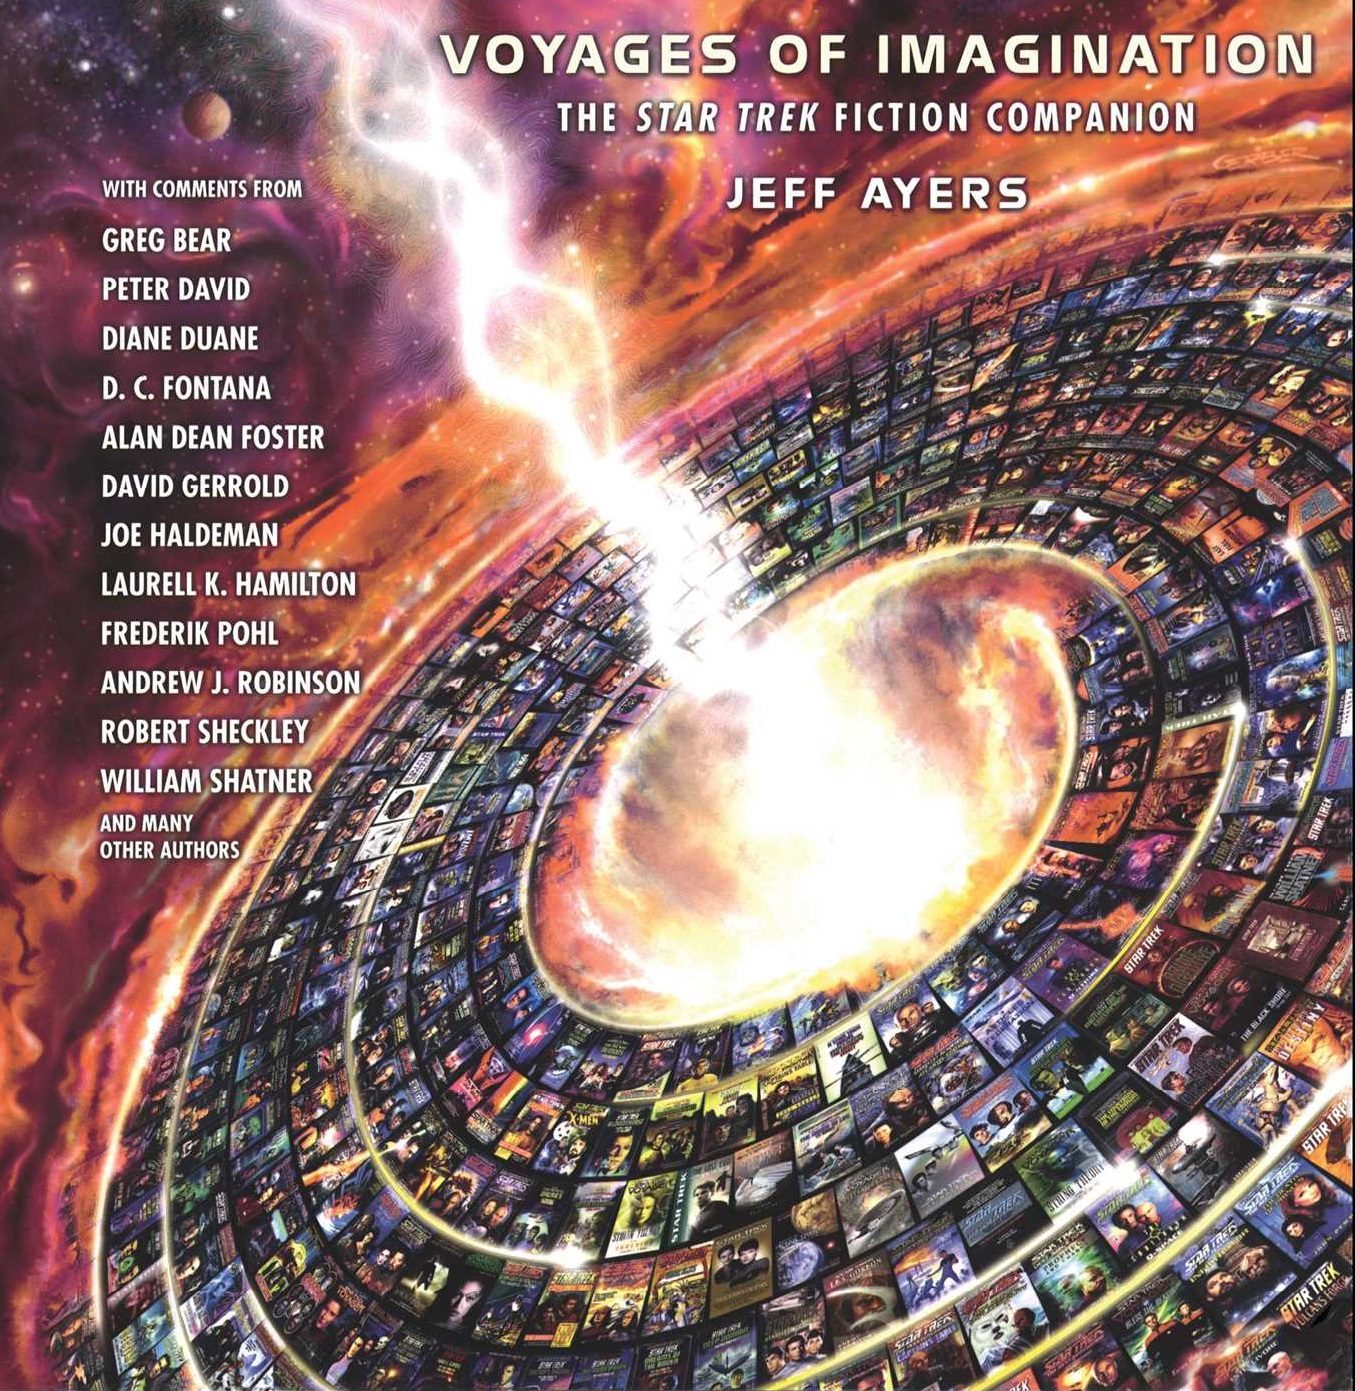 star-trek-voyages-of-imagination-the-star-trek-fiction-companion-articlecover.jpg